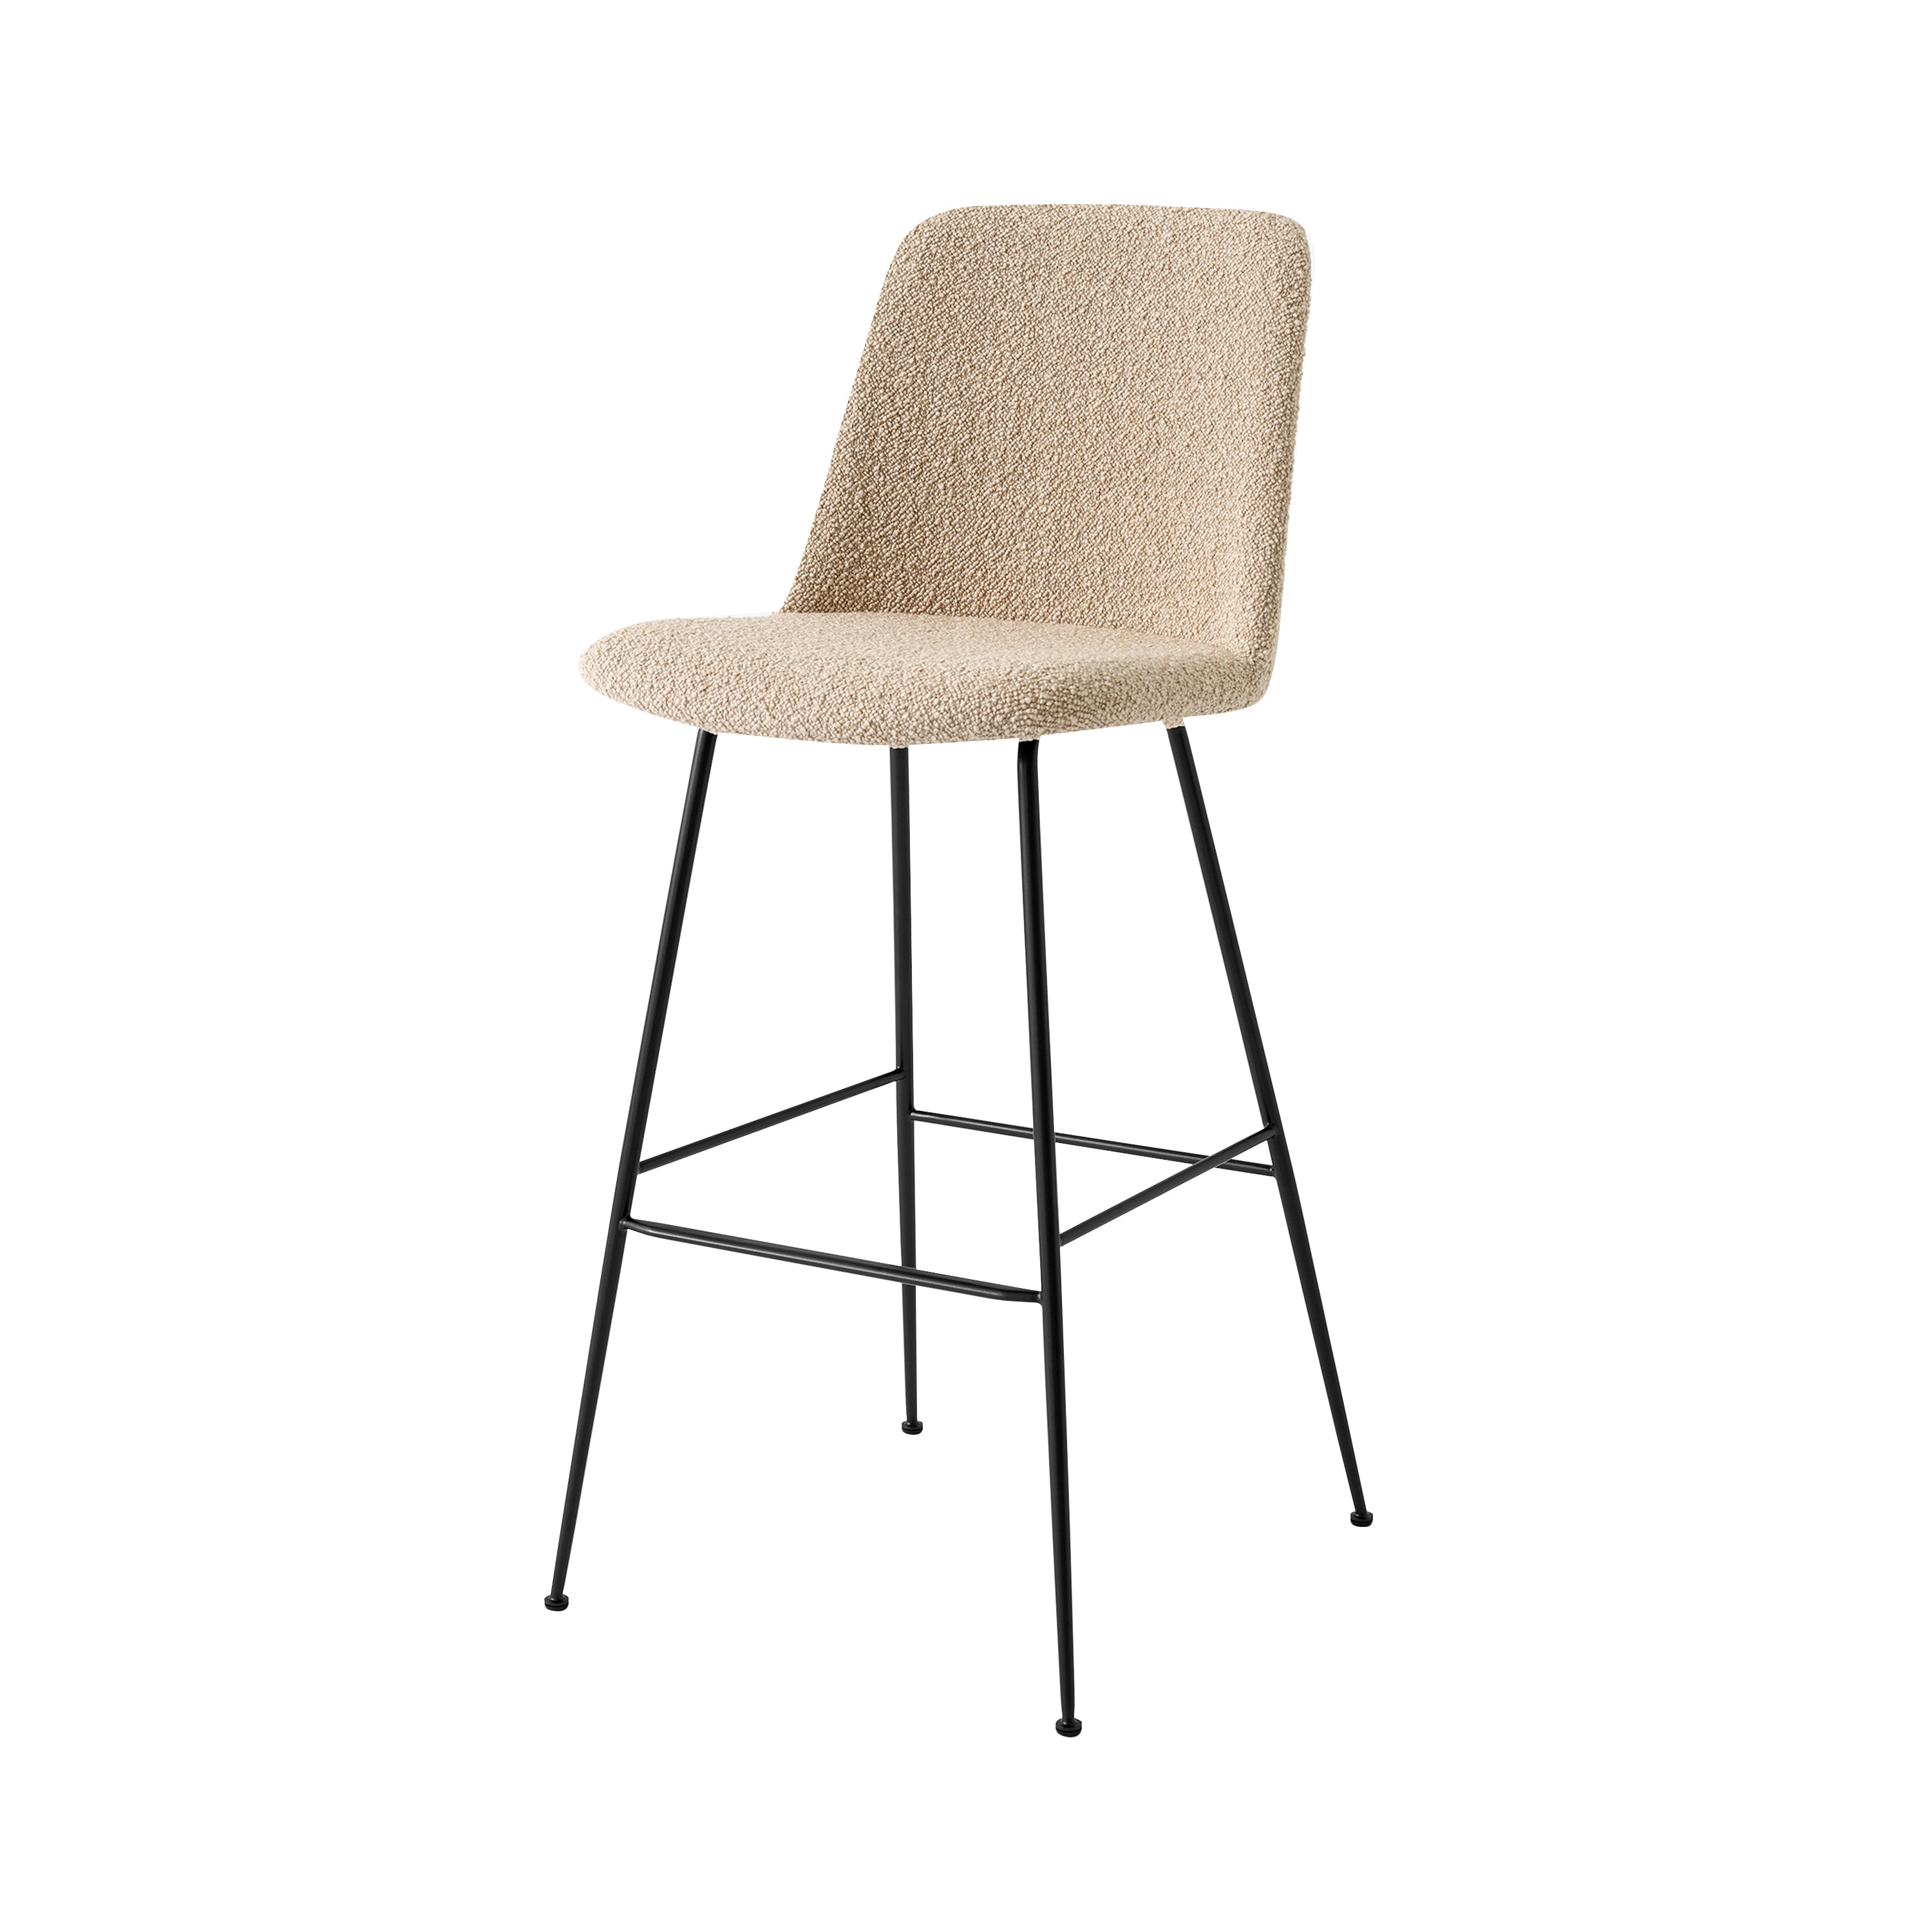 Rely Bar + Counter Highback Chair: HW93 + HW98 + Bar (HW98) + Black